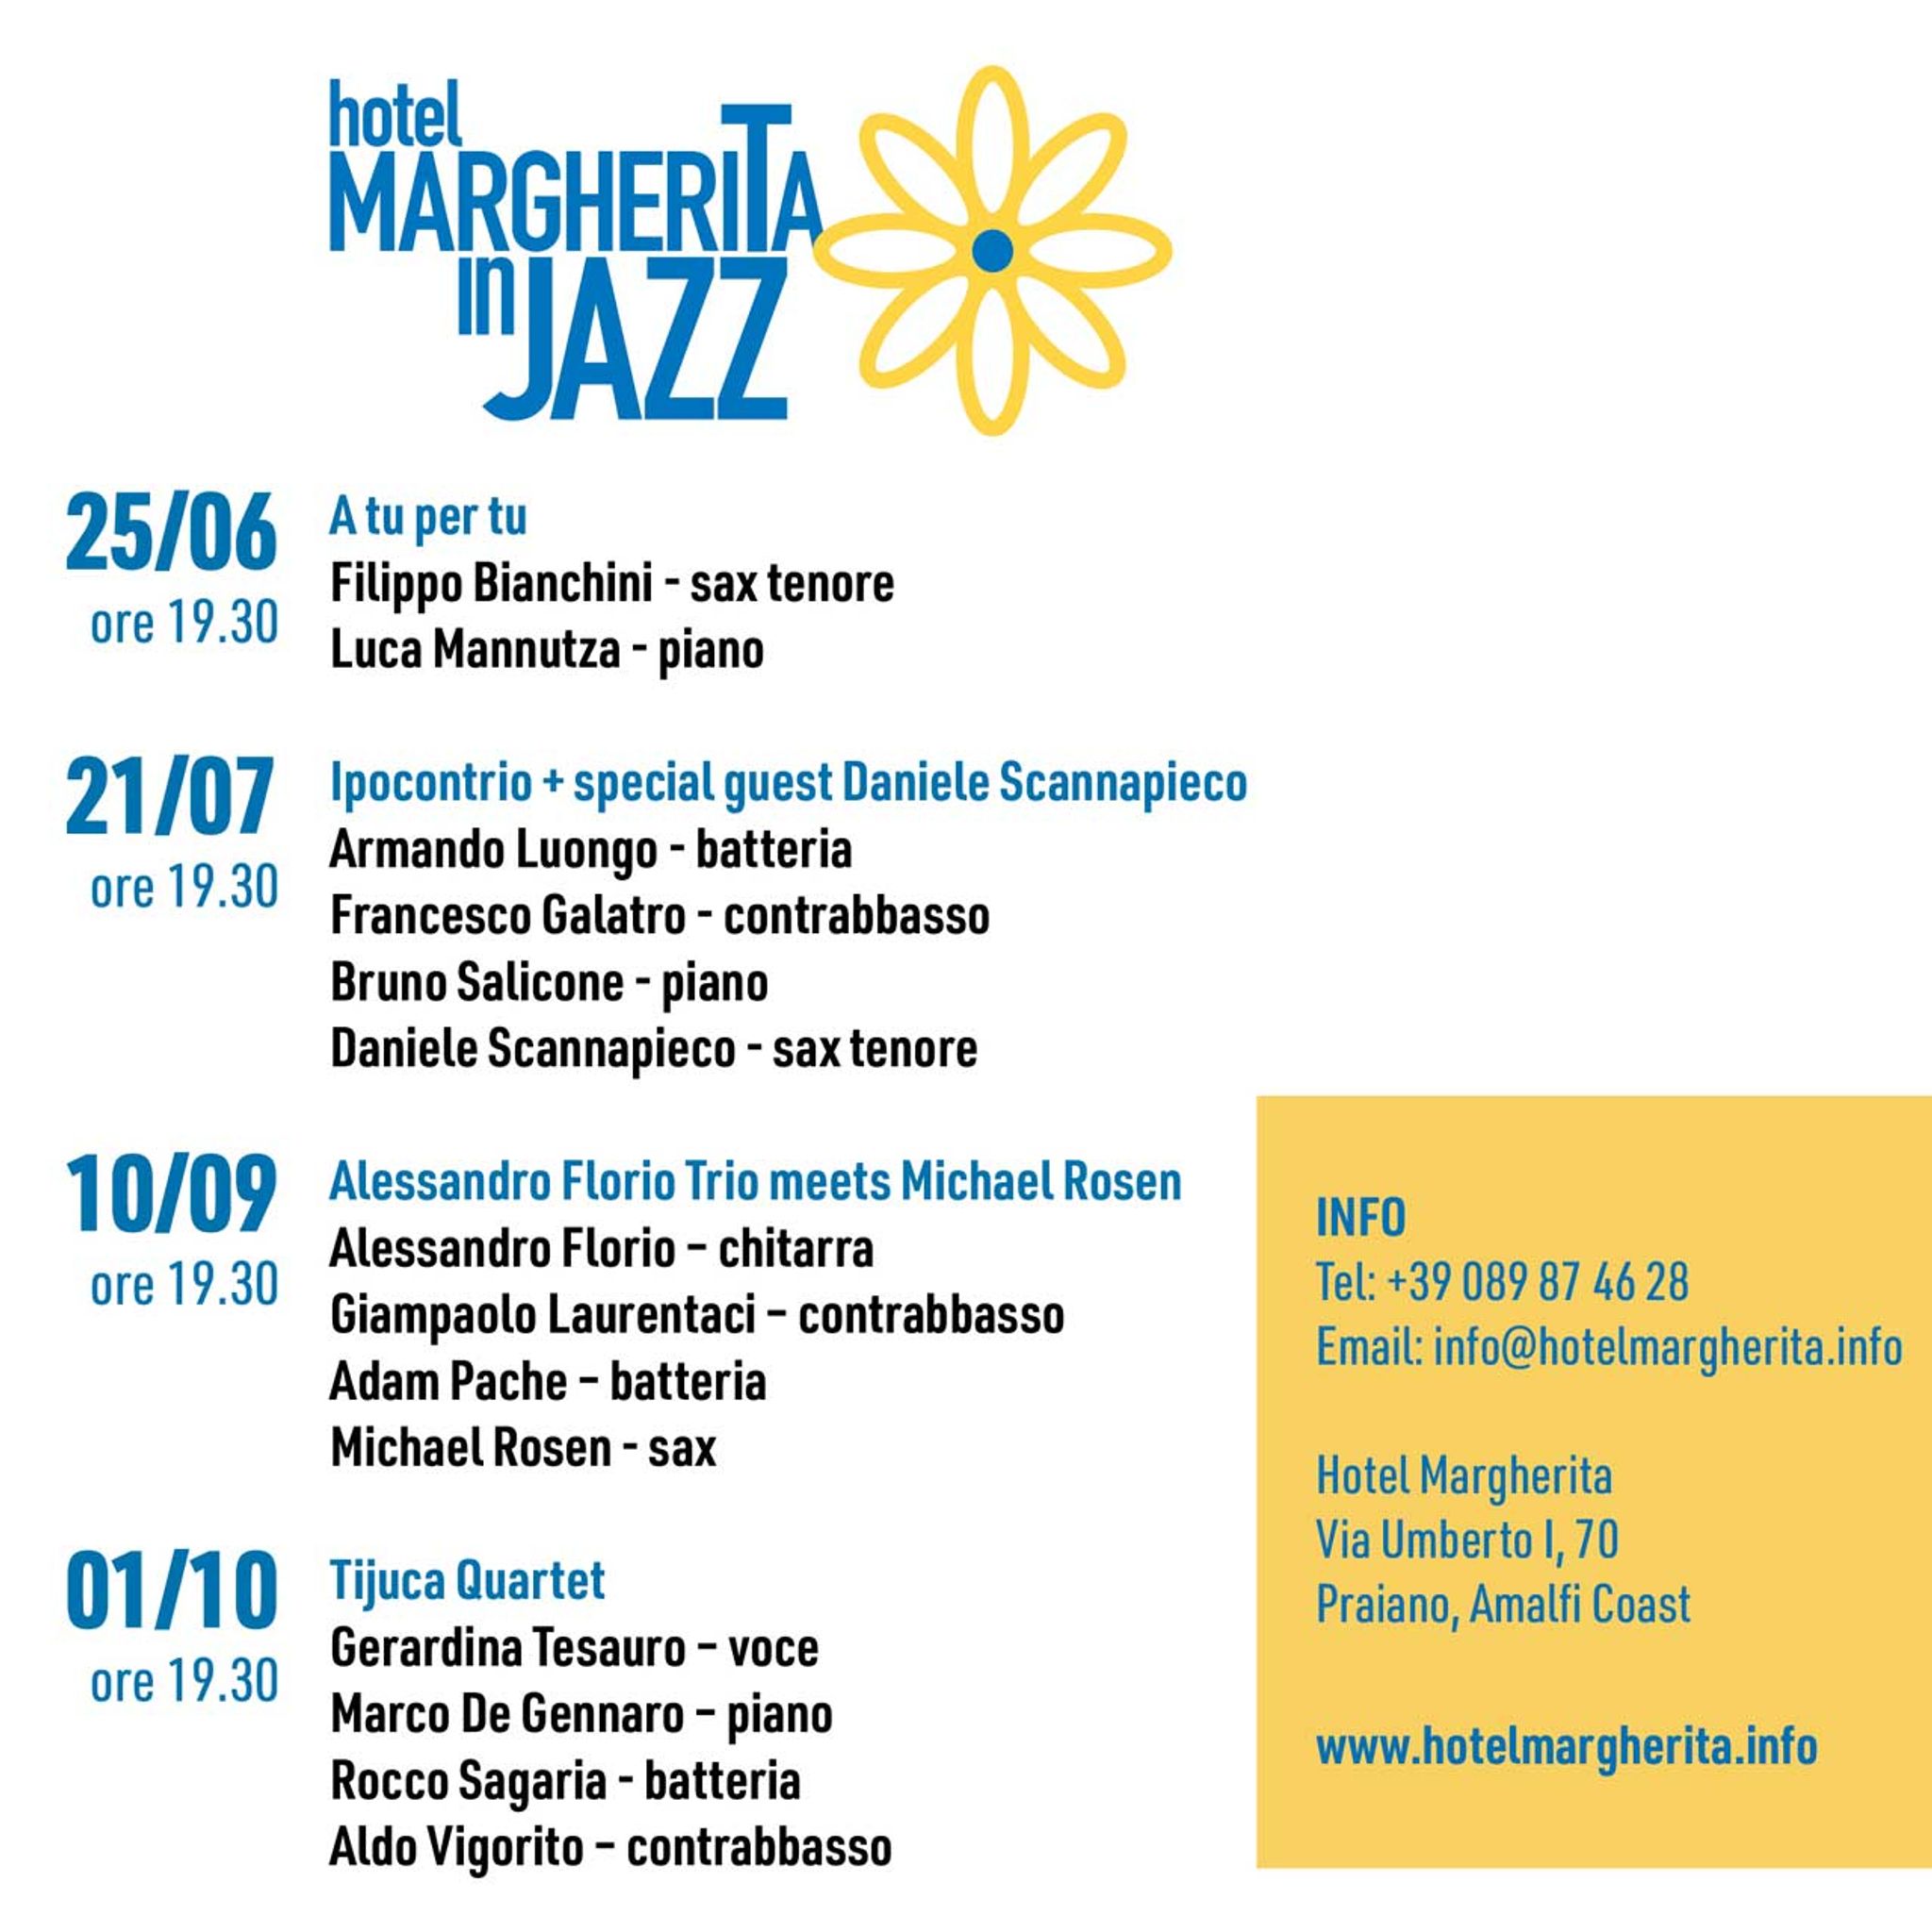 Hotel Margherita in Jazz: Tijuca Quartet